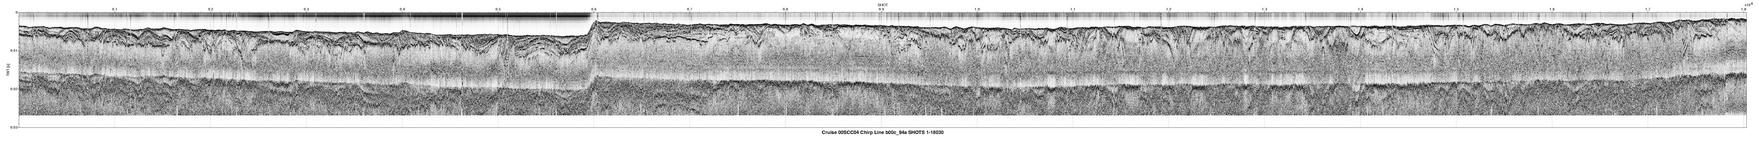 00SCC04 b00c_94a seismic profile image